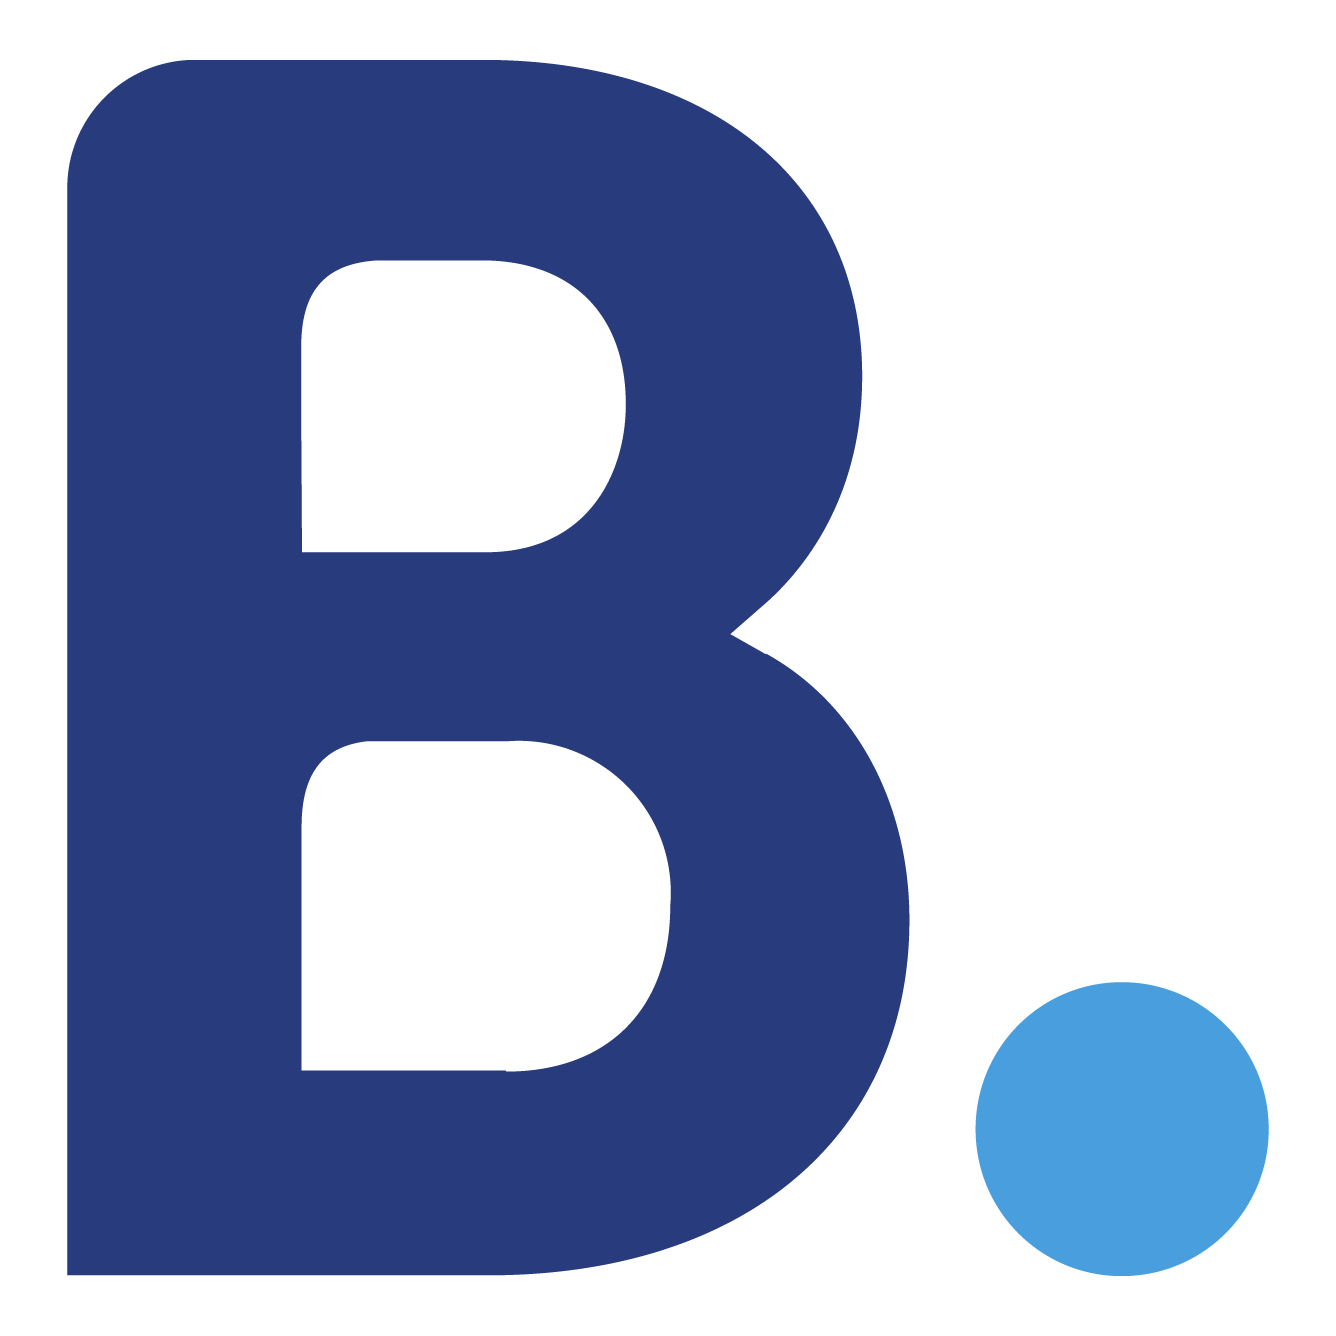 booking com icon logo